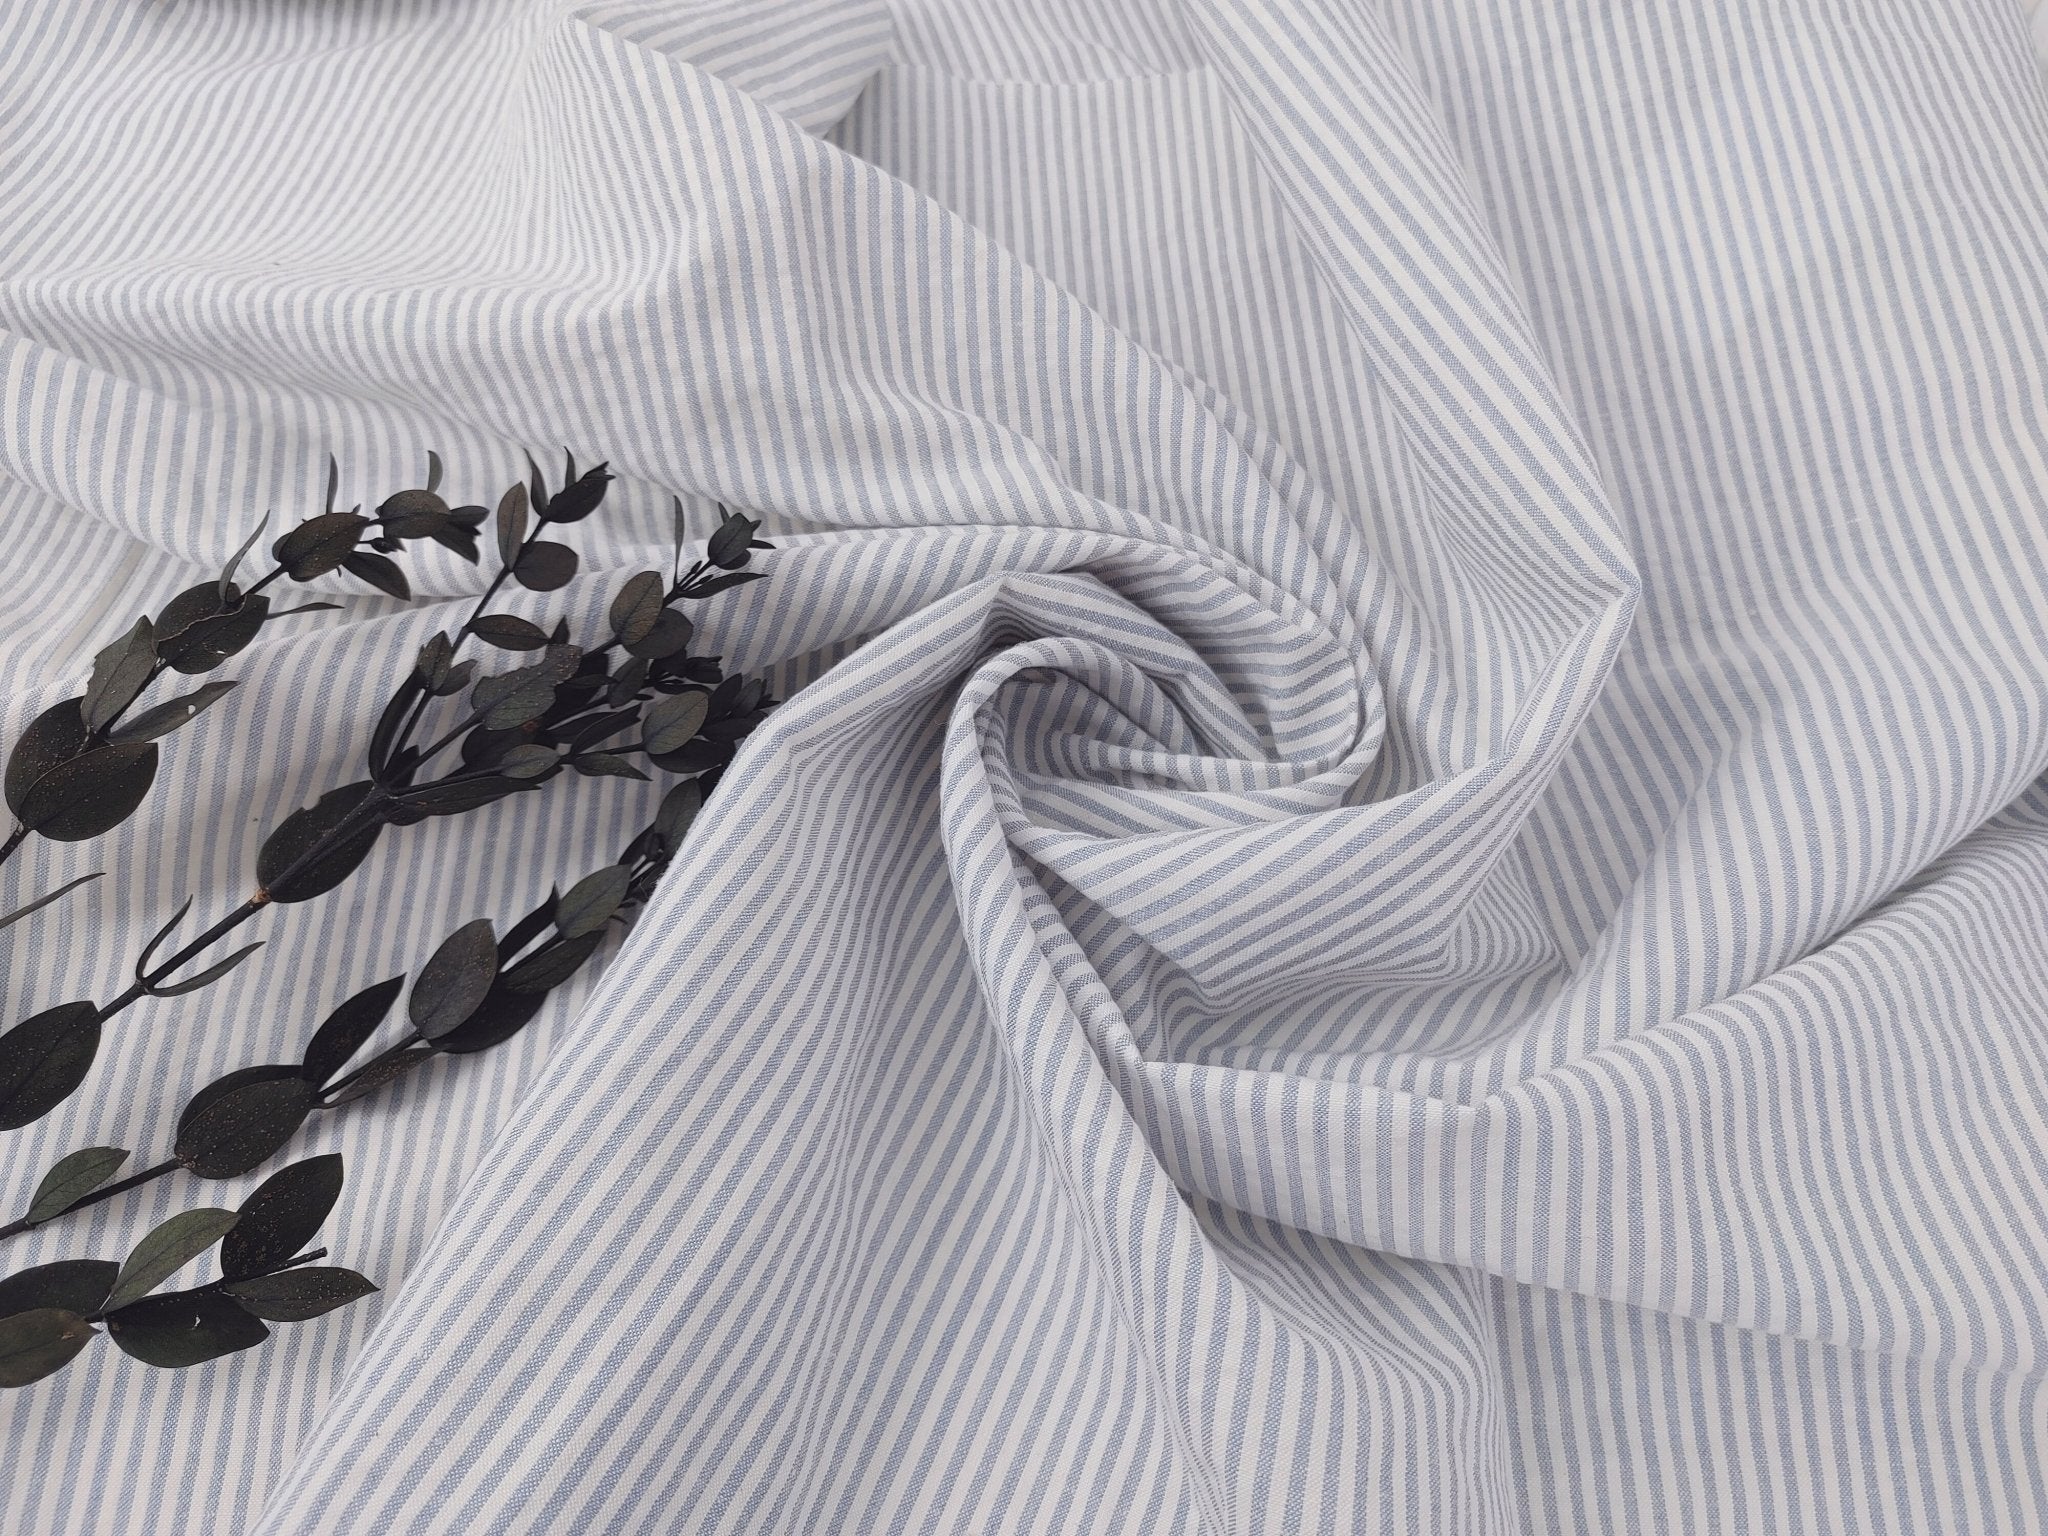 Ramie Cotton Nylon Stripe Fabric with Subtle Seersucker Effect 2444 - The Linen Lab - Blue